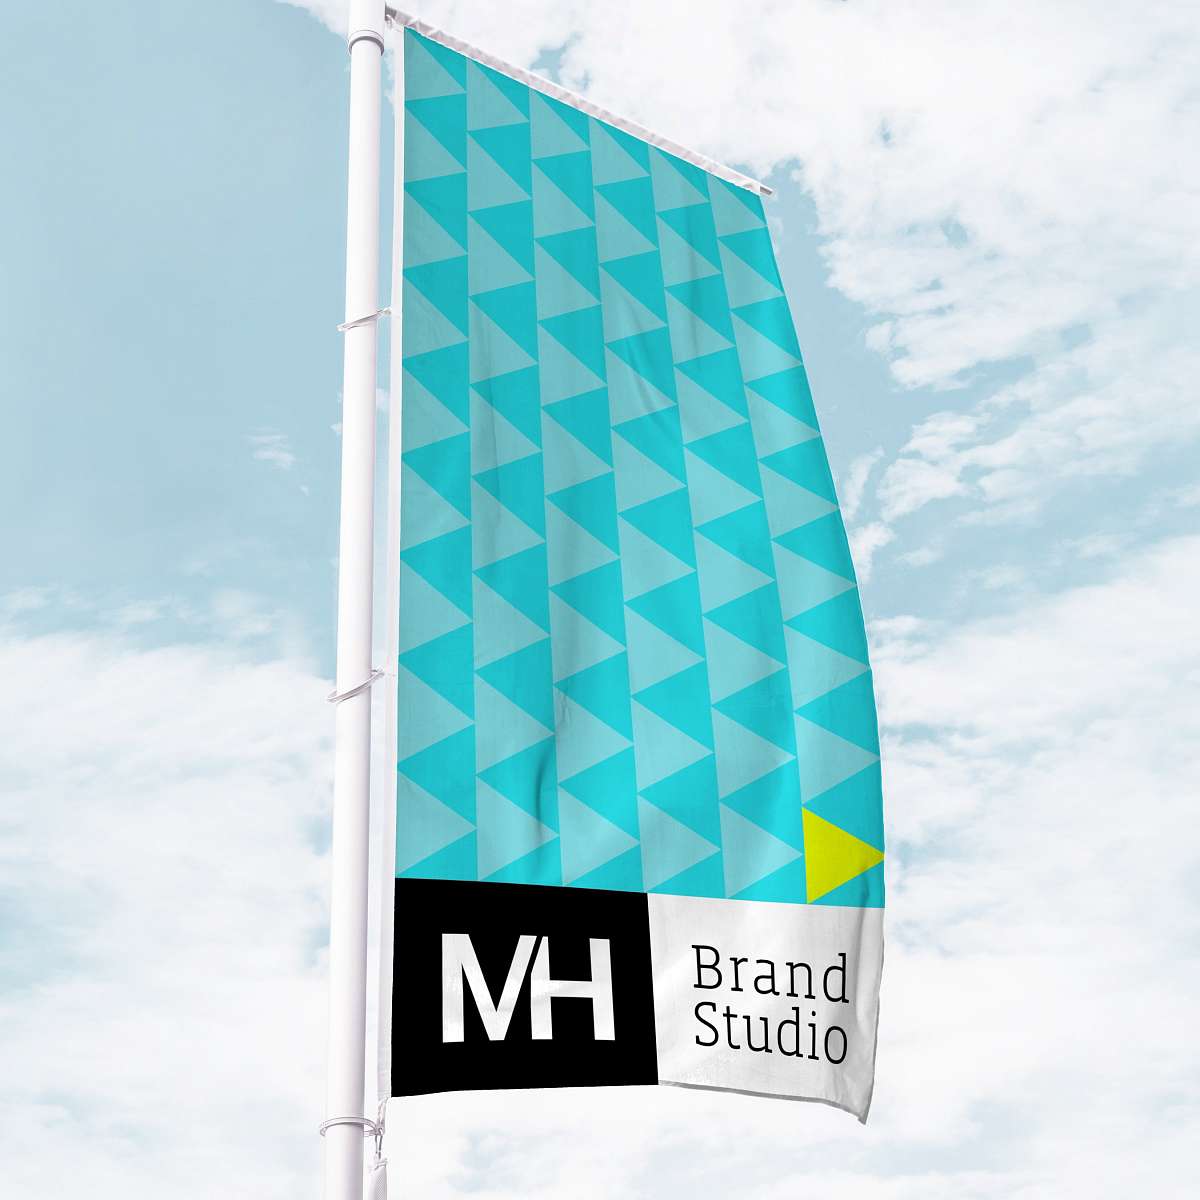 MH Brand Studio